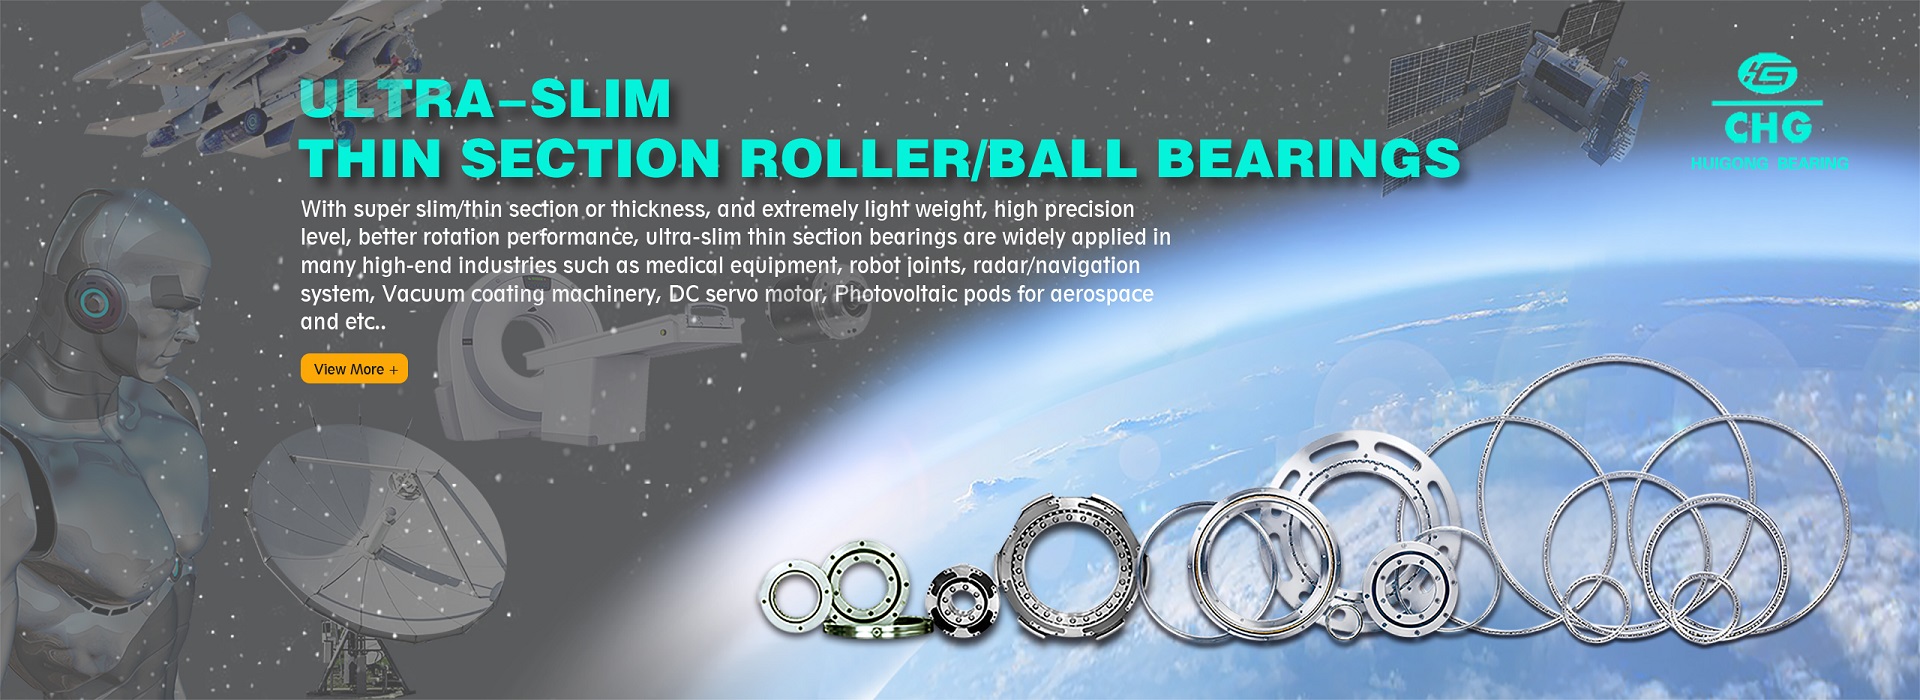 Ultra-slim Thin Section Roller/Ball Bearings